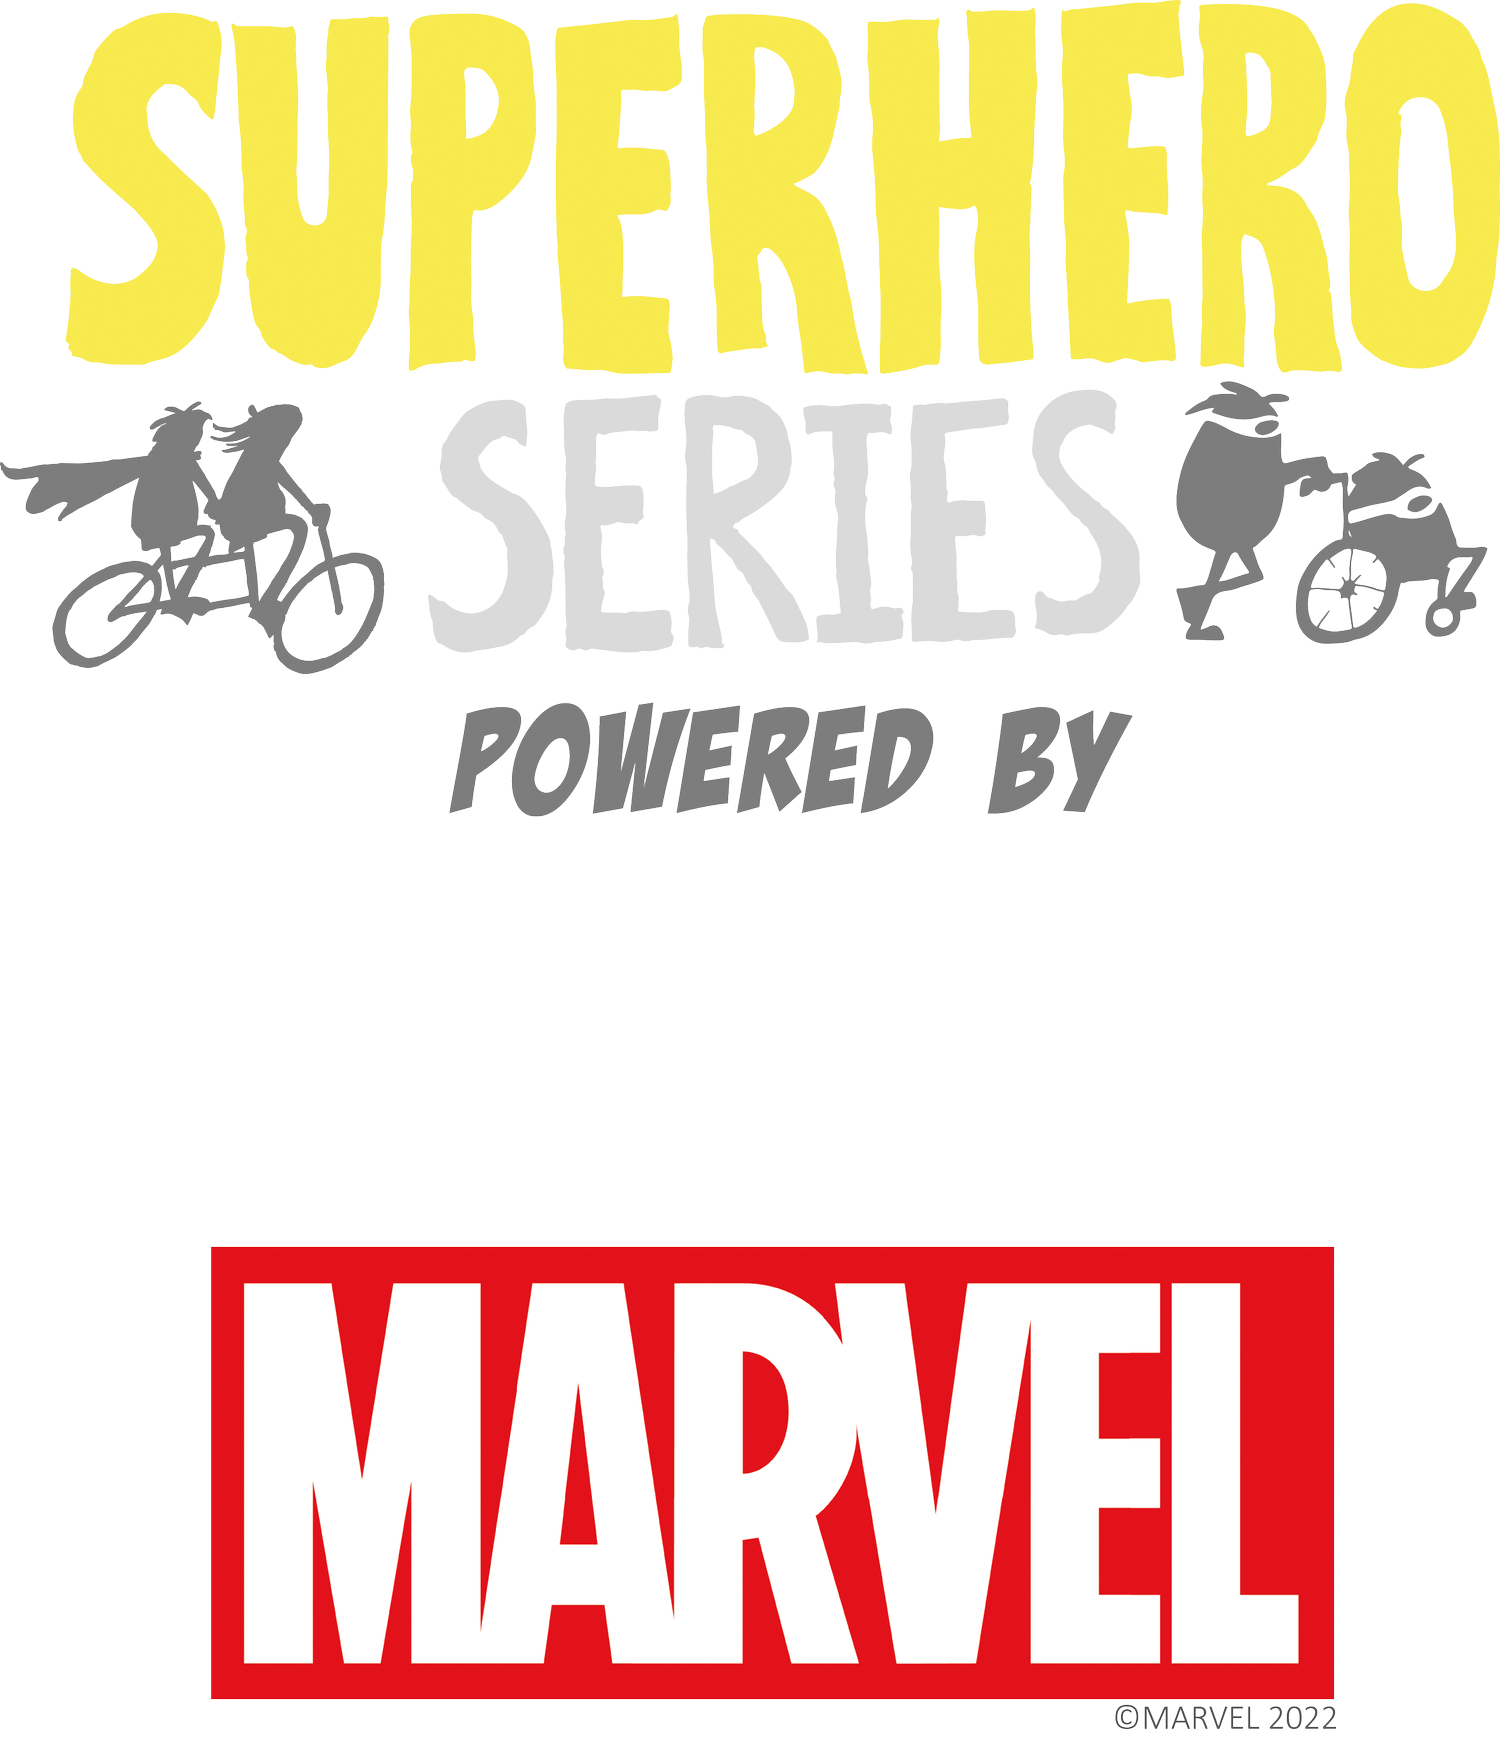 superhero series